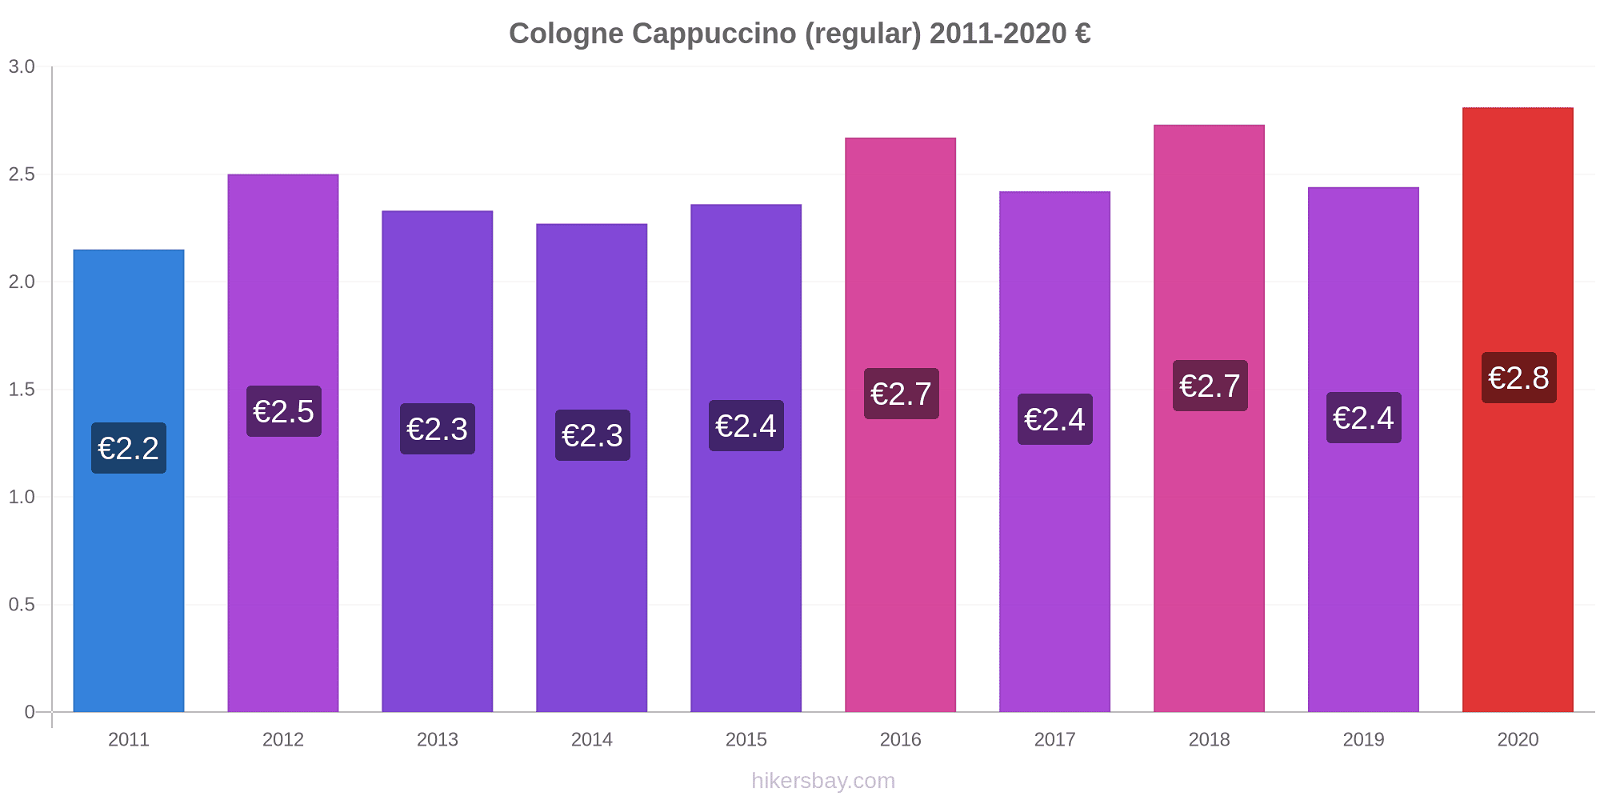 Cologne price changes Cappuccino (regular) hikersbay.com